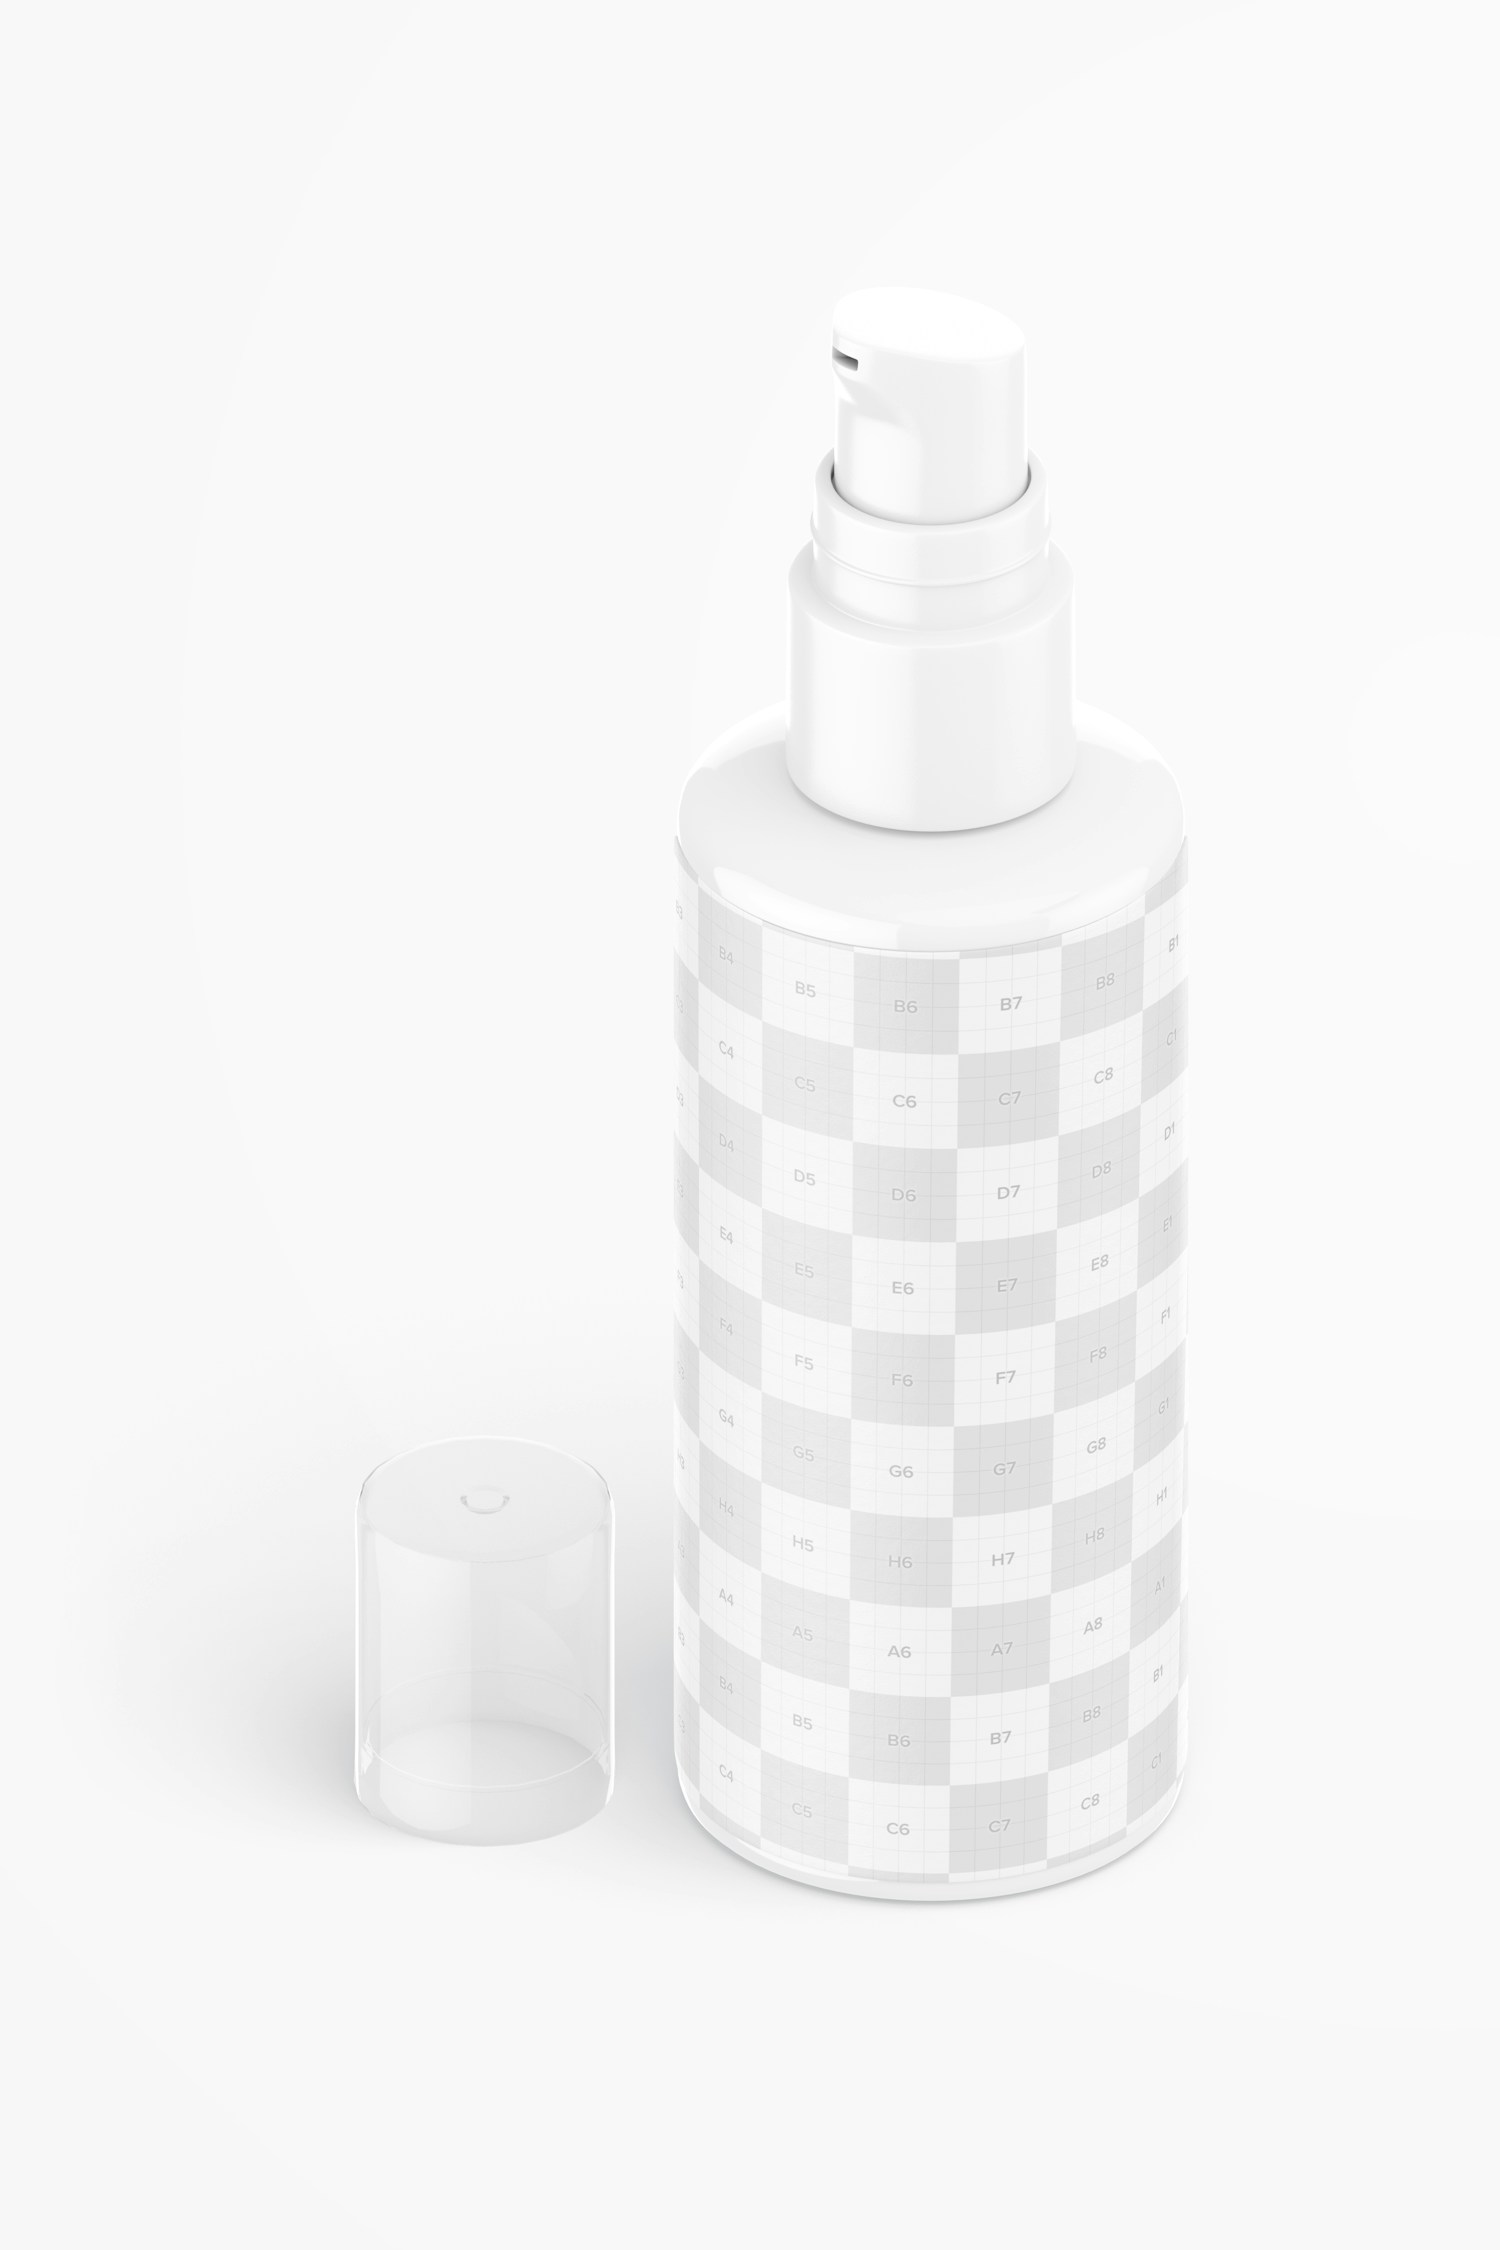 3 oz Pump Bottle Mockup, Isometric View